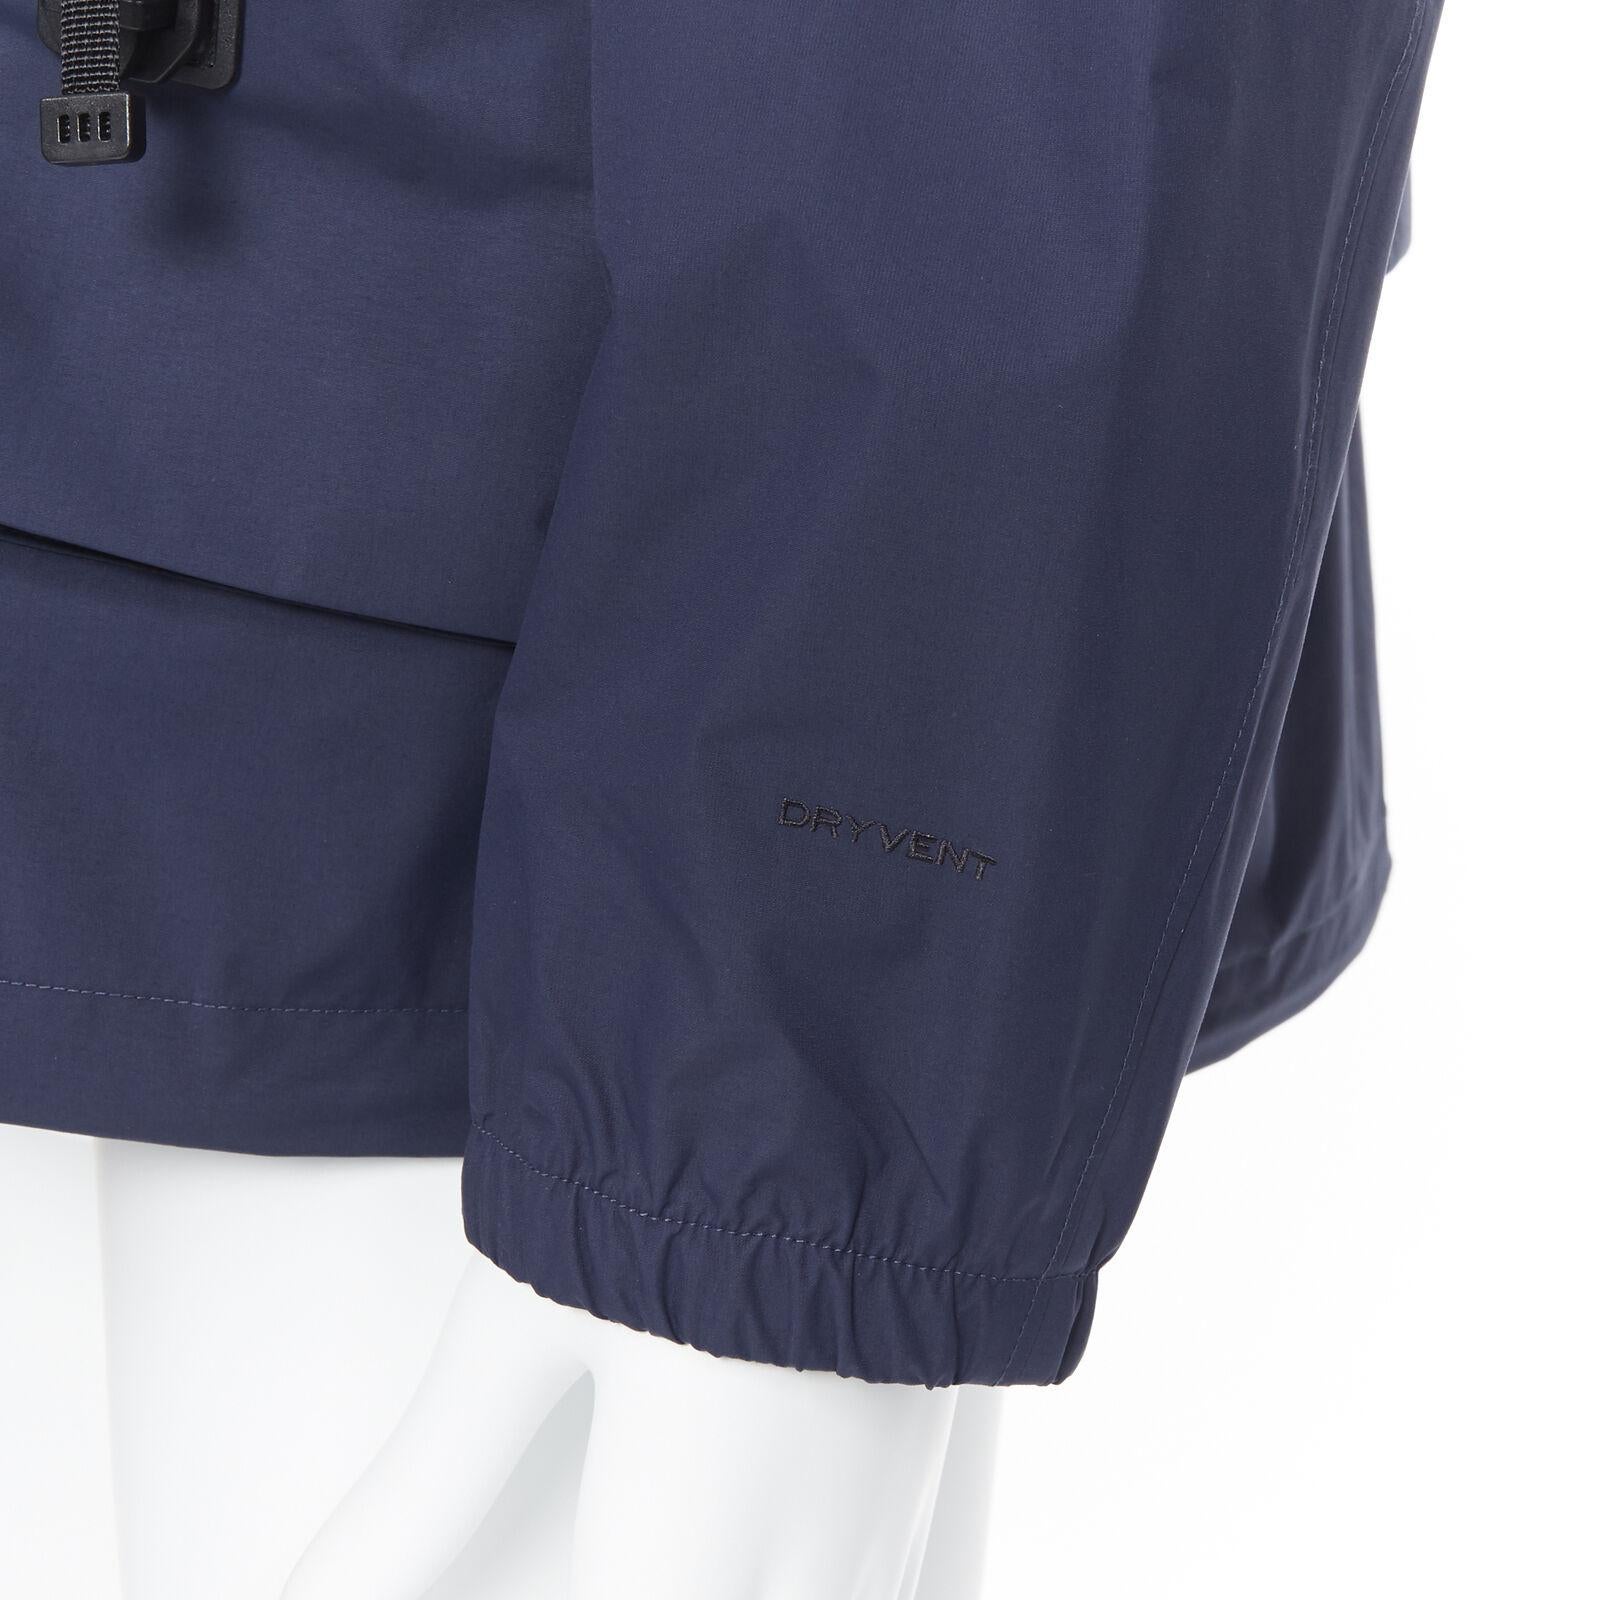 new THE NORTH FACE Black Series KK Urban Explore navy utility pocket jacket L XL For Sale 6